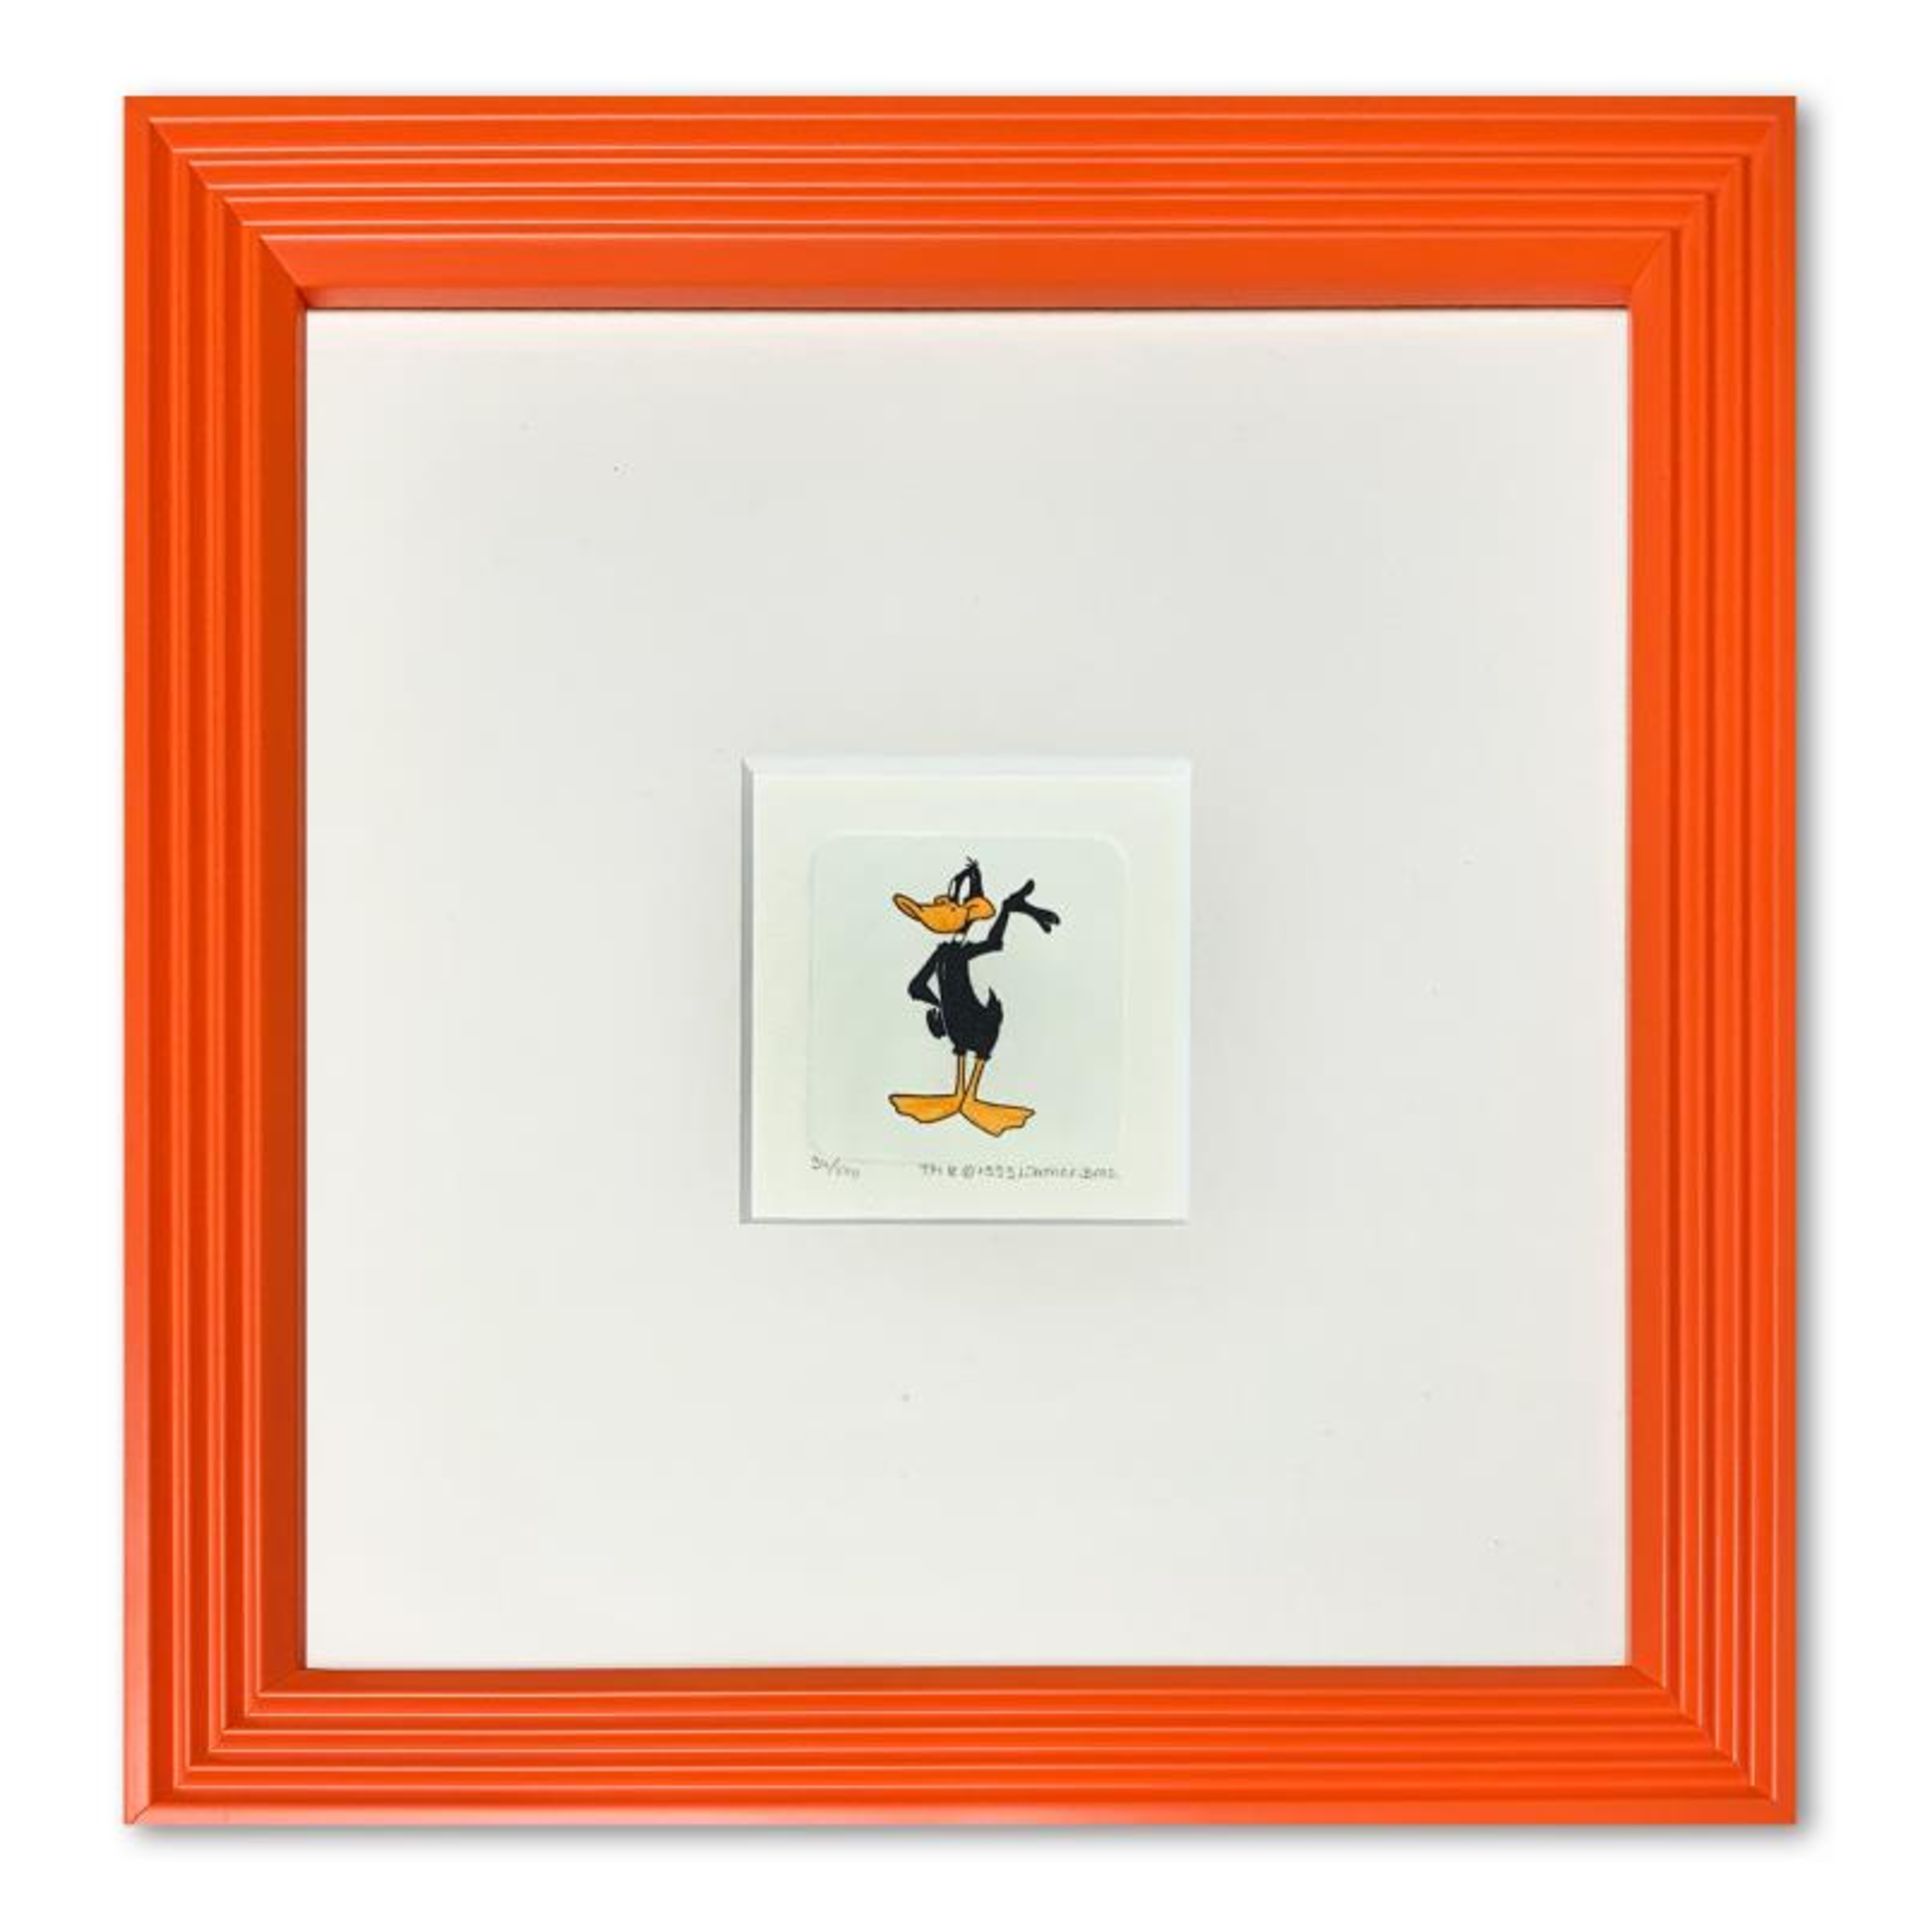 Daffy Duck by Looney Tunes